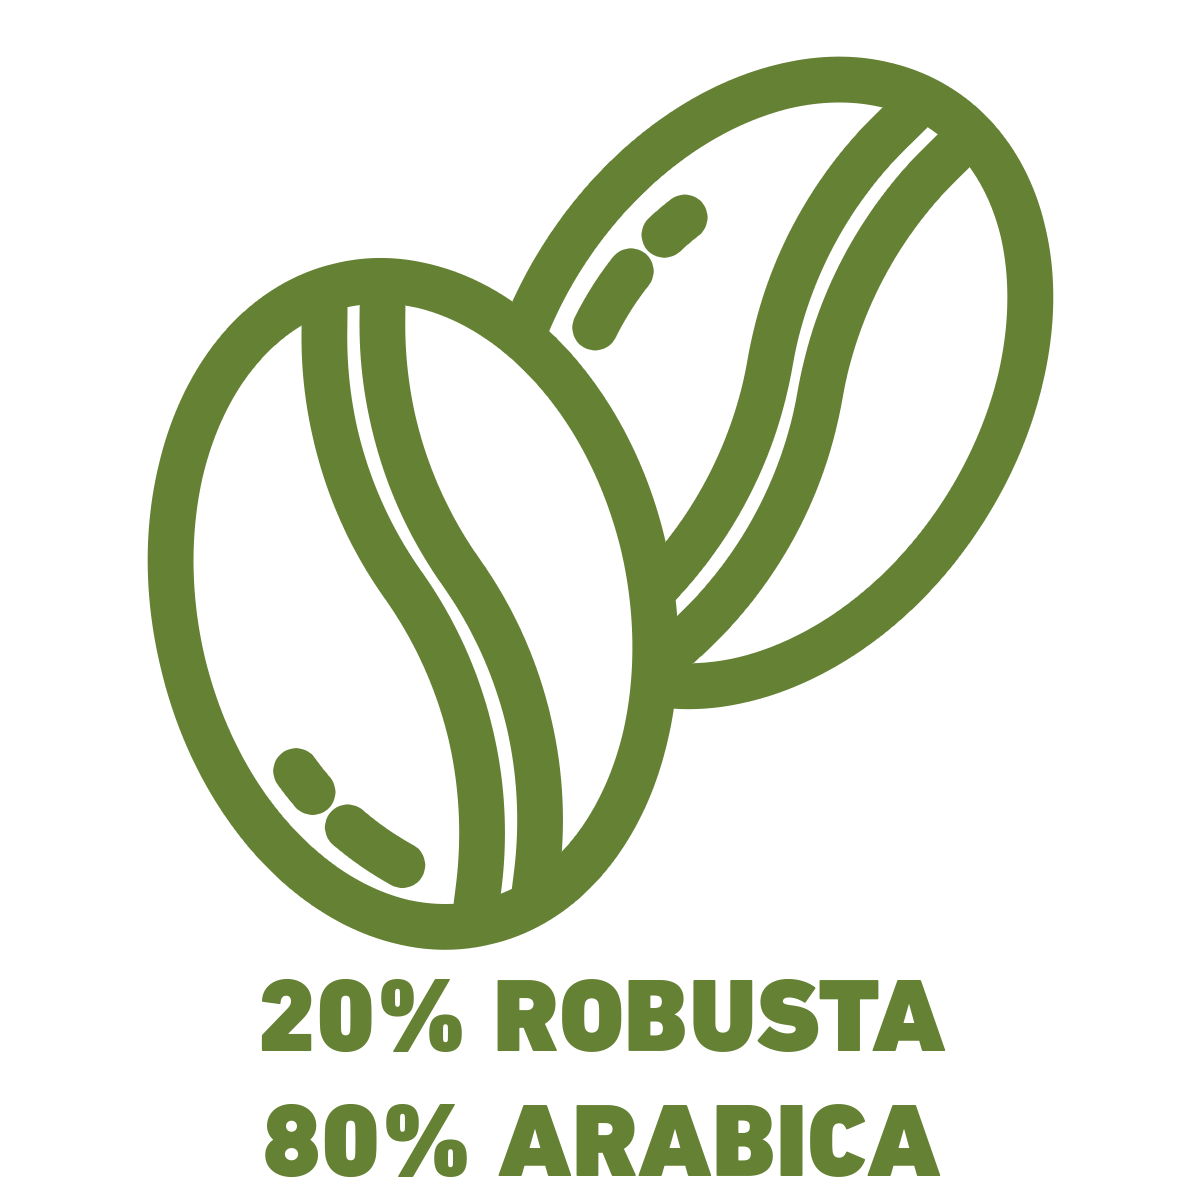 20% Robusta 80% Arabica